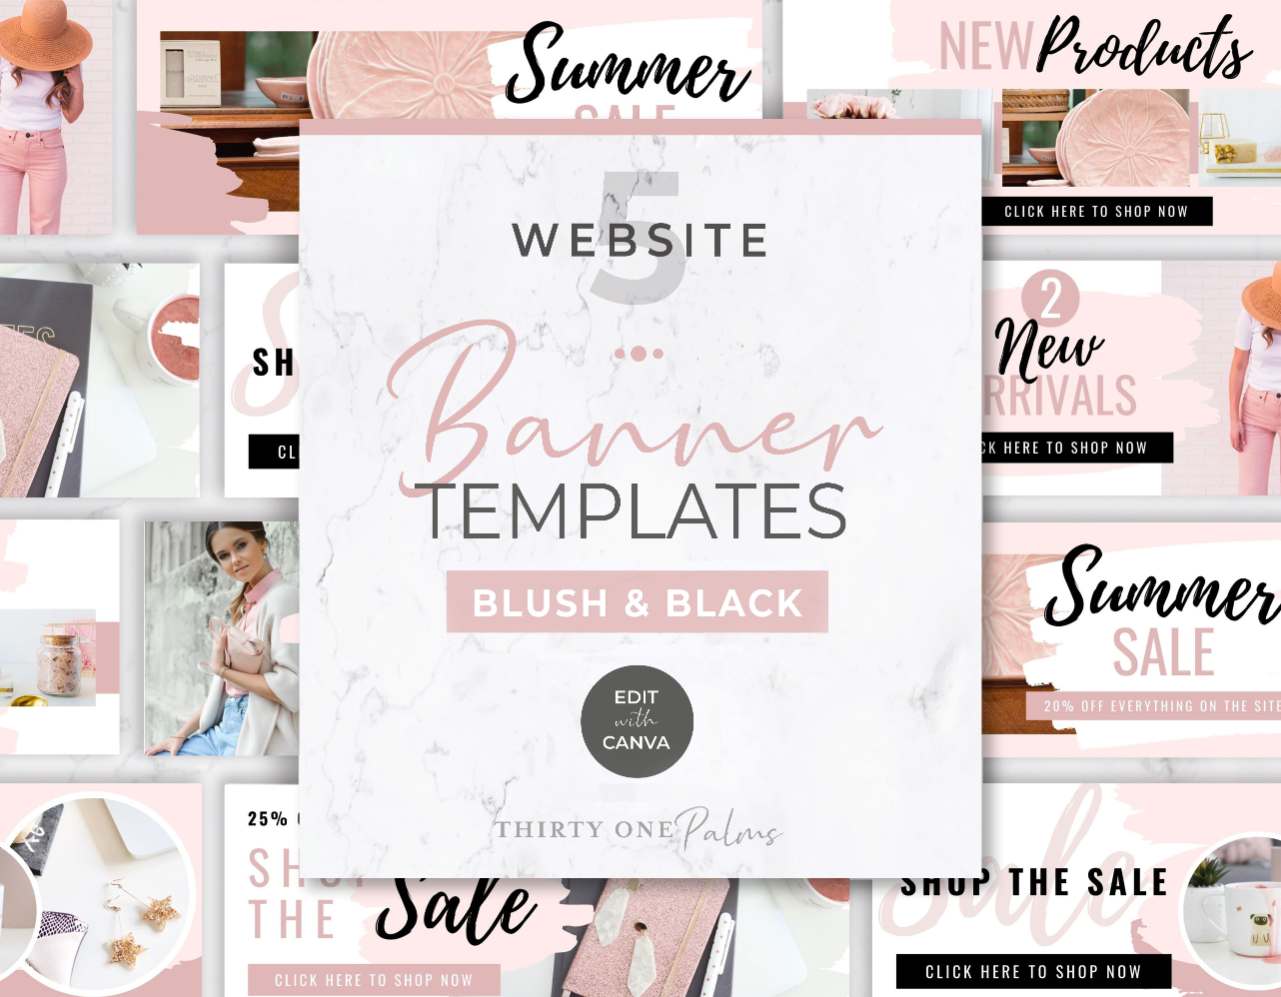 Website Banner Templates for Canva – Blush & Black